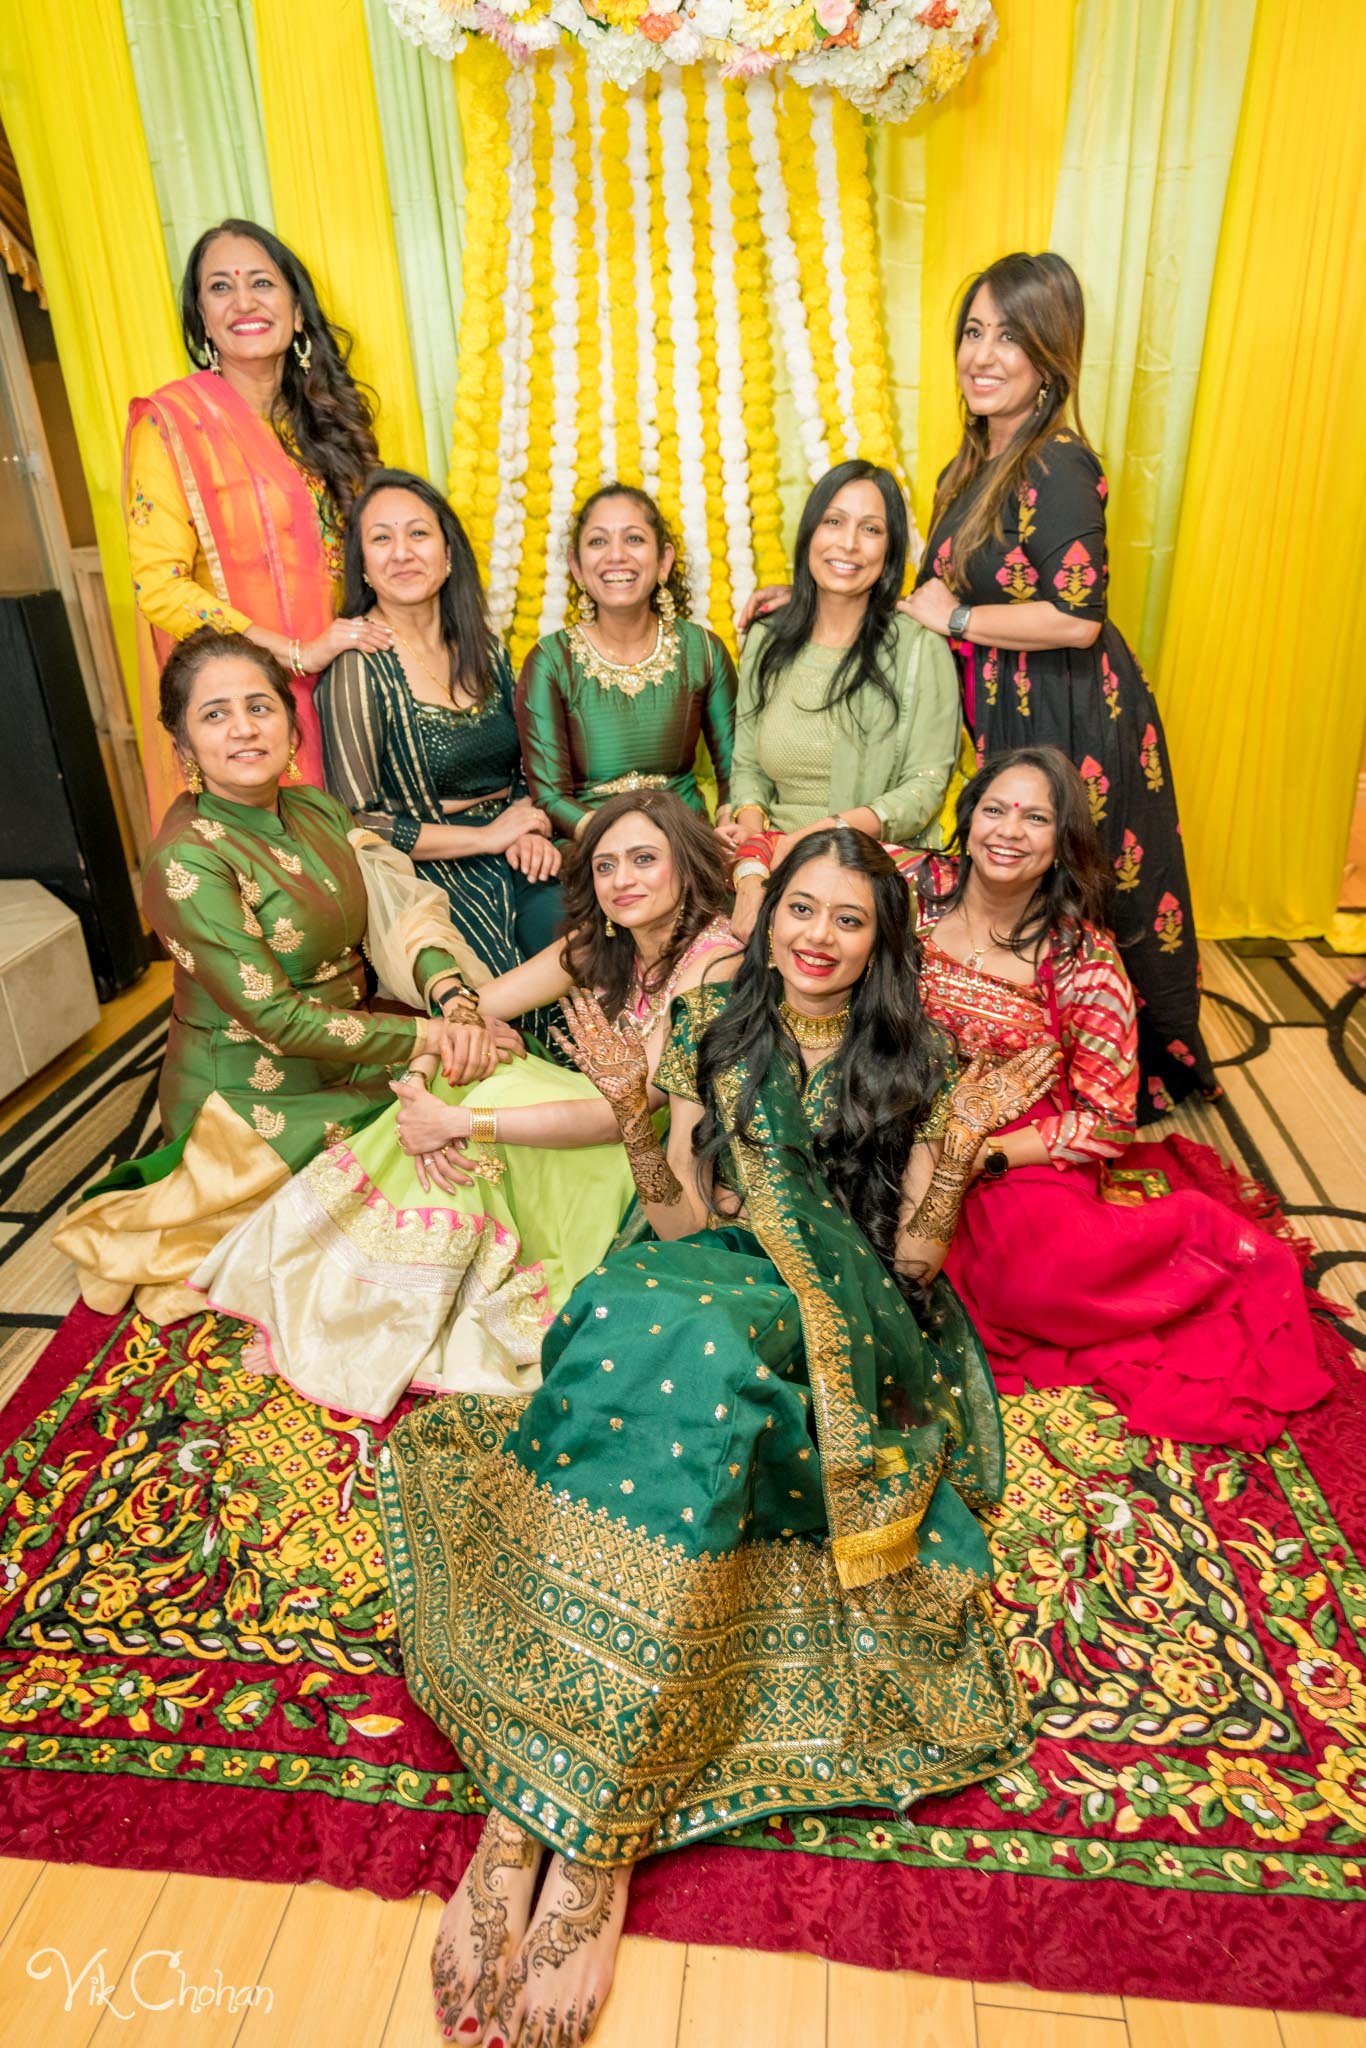 2022-02-03-Hely-&-Parth-Mendi-Indian-Wedding-Vik-Chohan-Photography-Photo-Booth-Social-Media-VCP-215.jpg